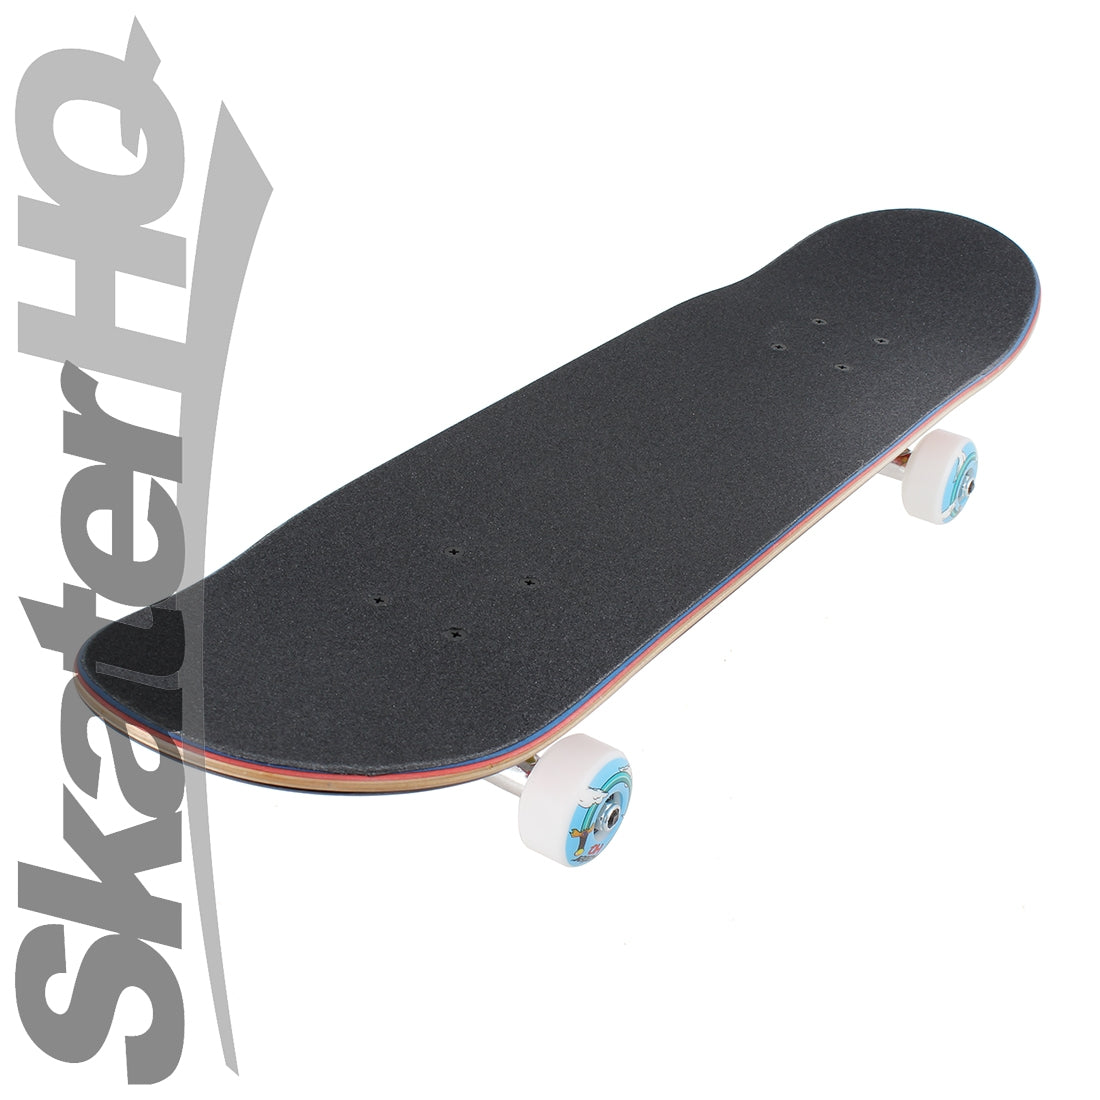 Skater HQ Meal Time 7.25 Mini S Complete Skateboard Completes Modern Street